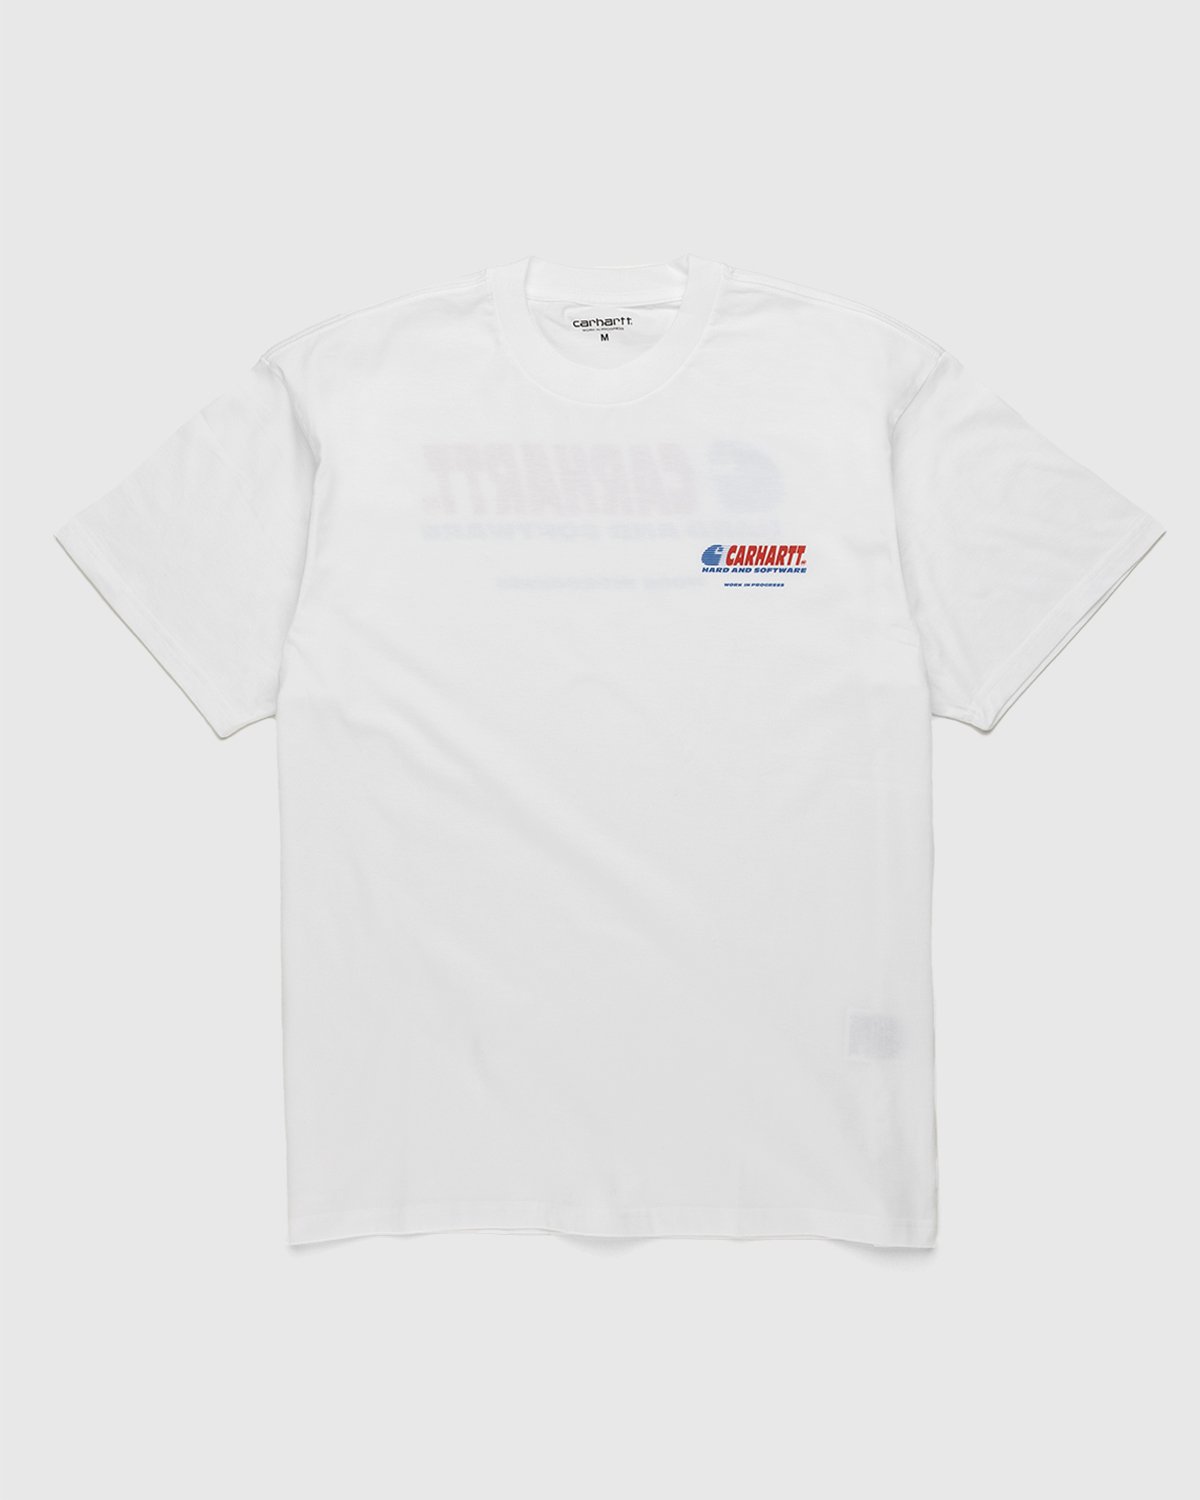 Carhartt WIP – Software T-Shirt White | Highsnobiety Shop